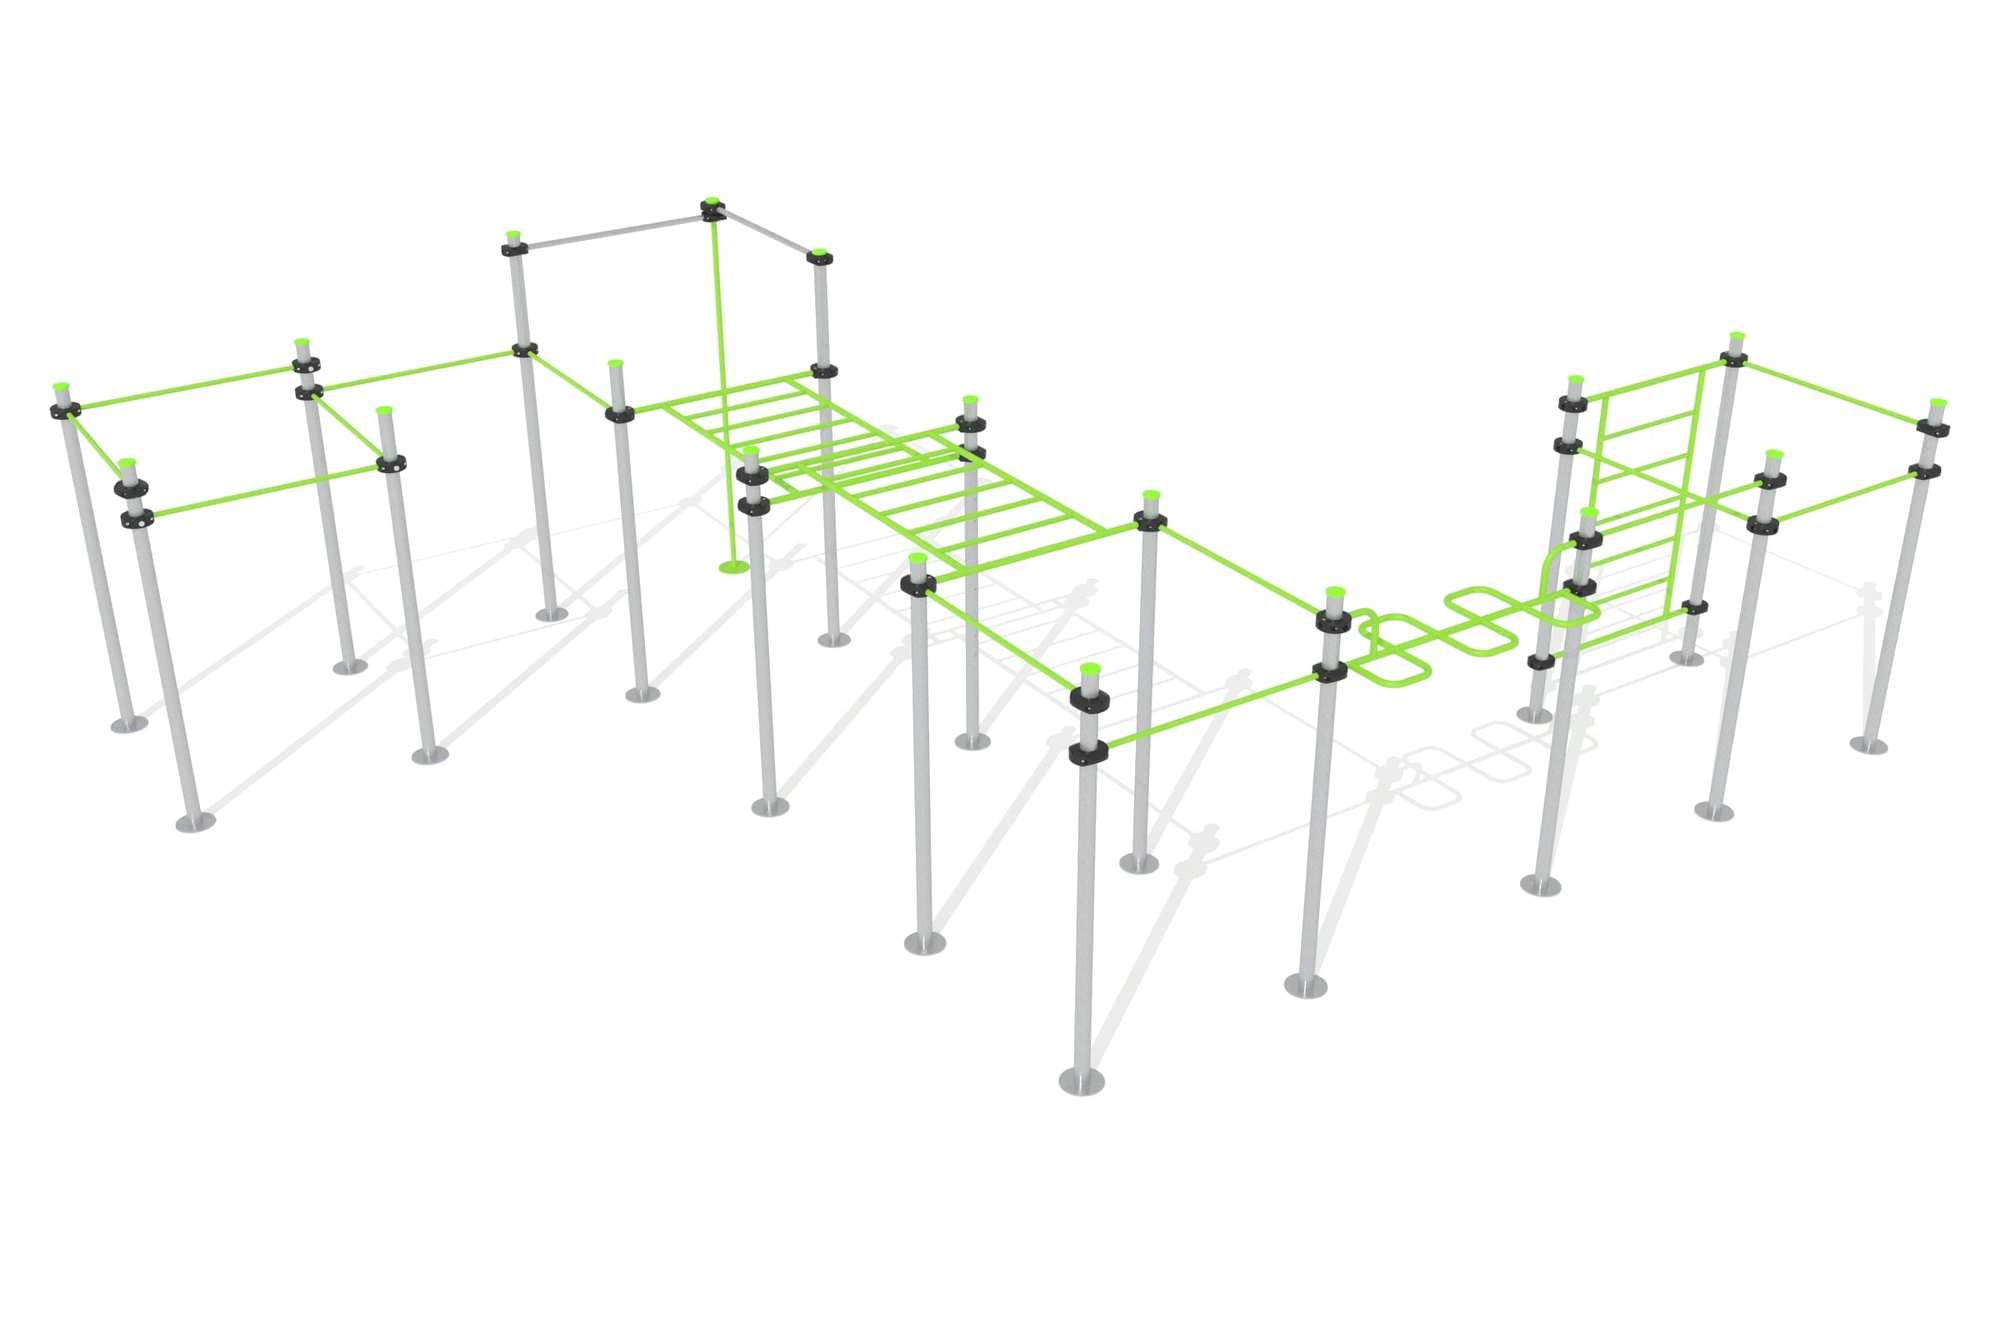 estructura postes barras calistenia certificado norma en16630 3d